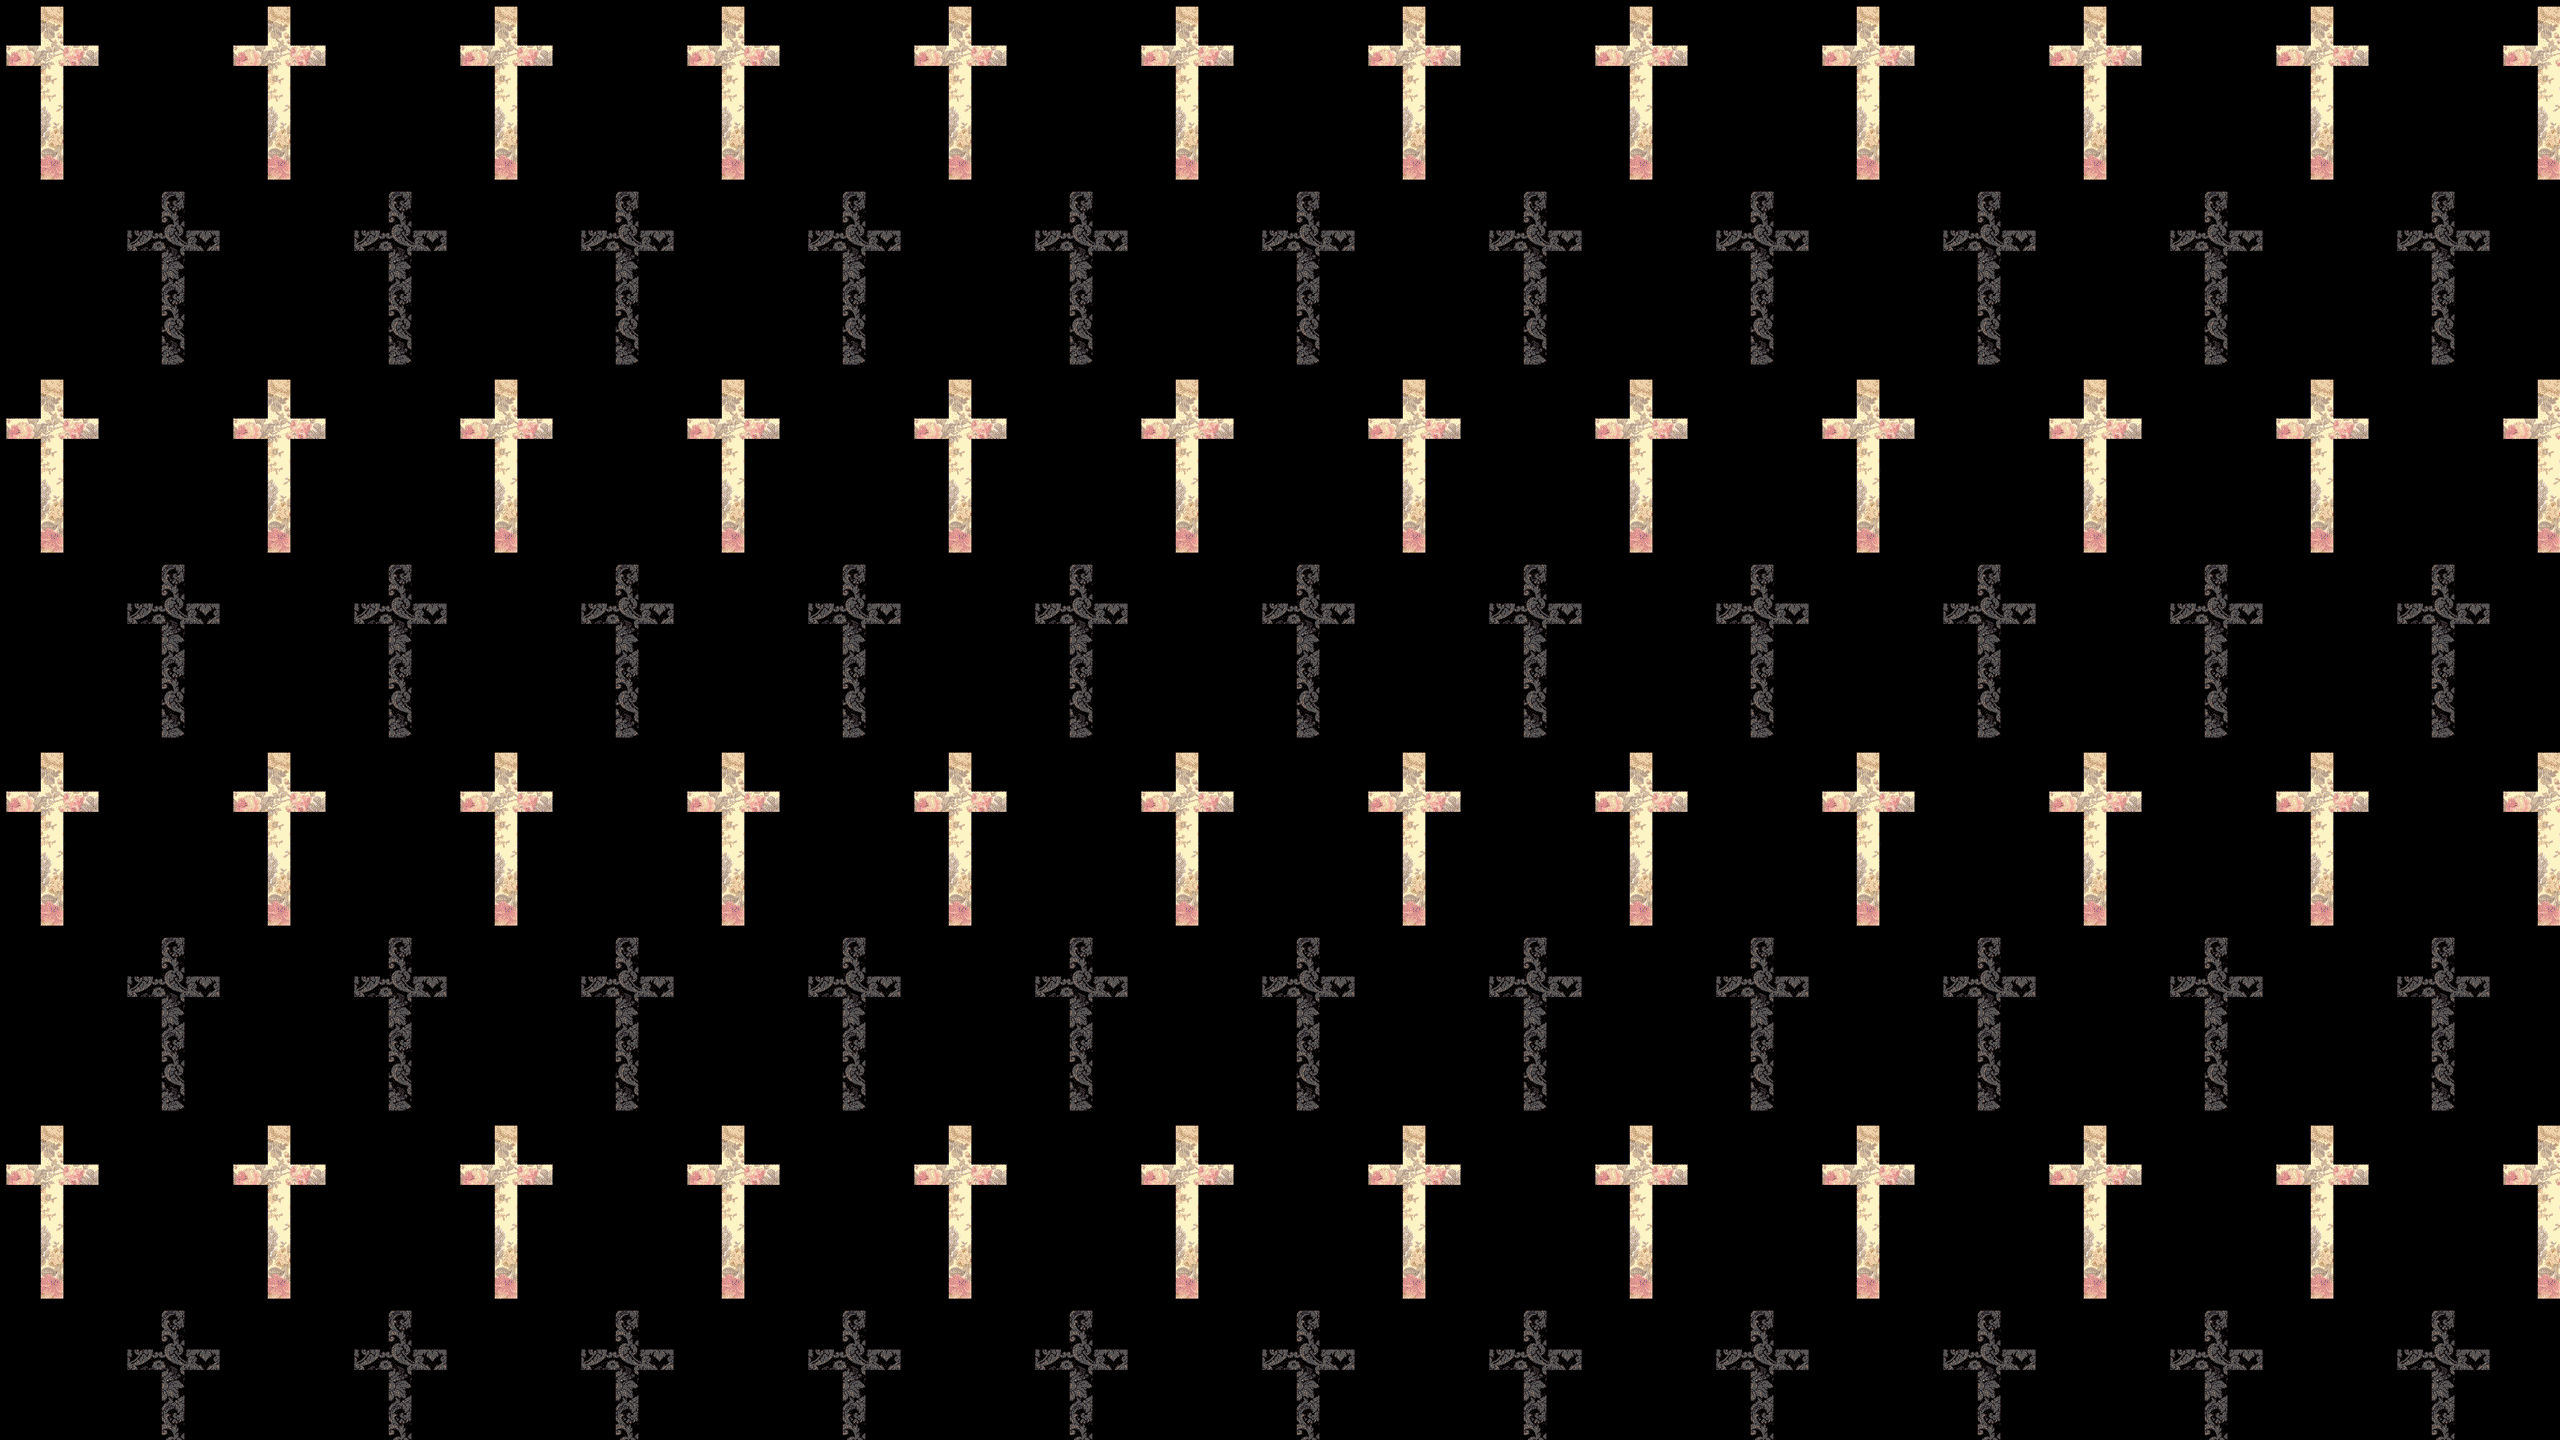 Inverted Crosses